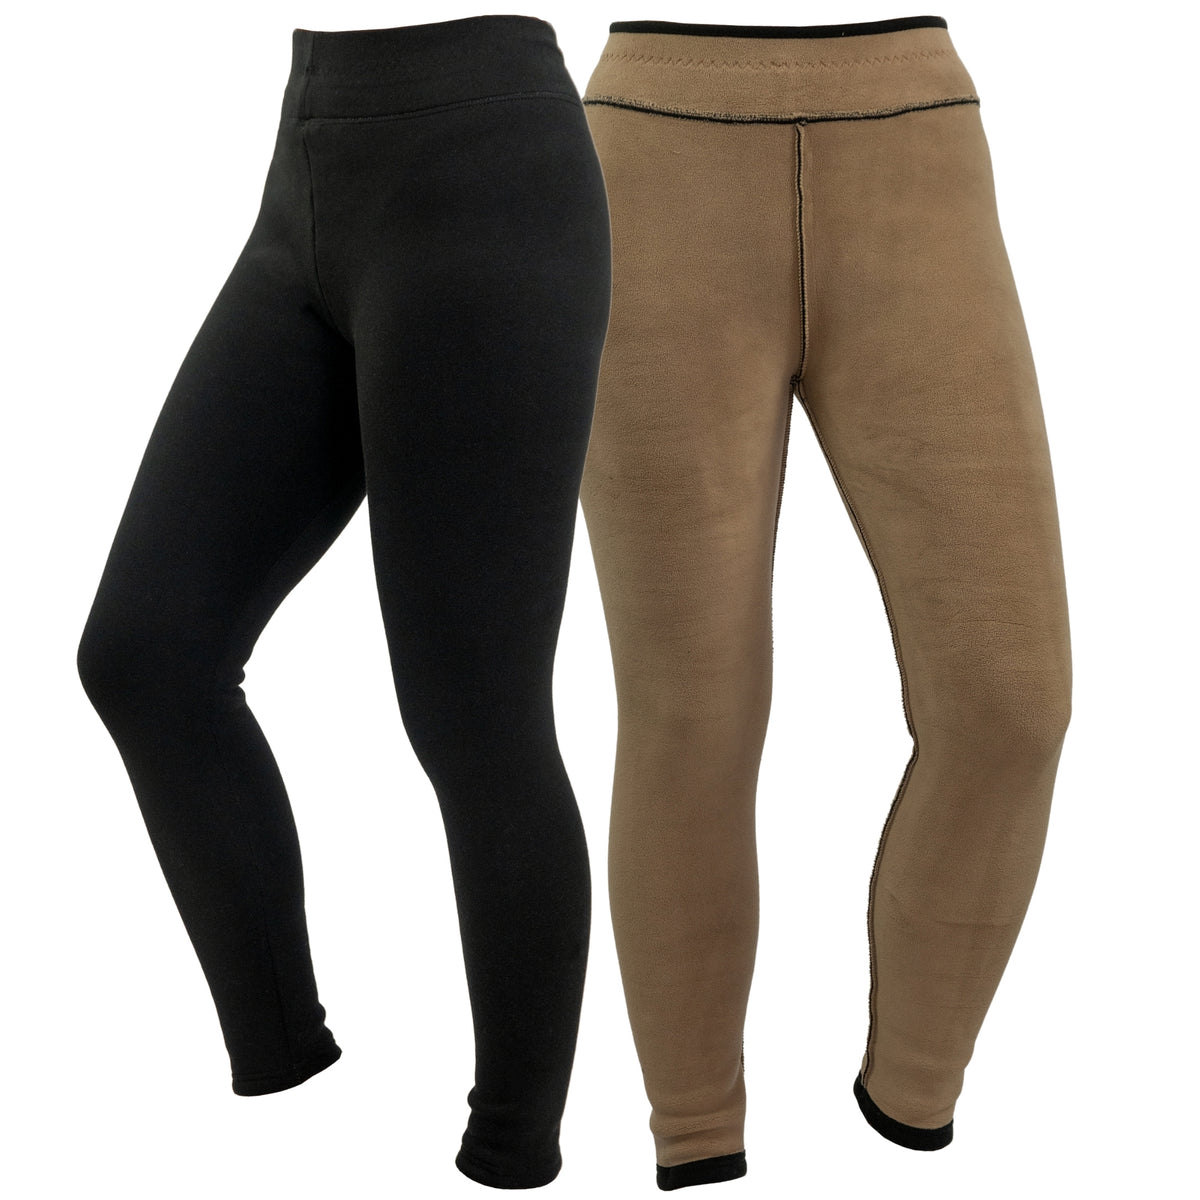 Ladies Thermal Fleece Leggings in Black - Catmandoo - The Golf Outfit